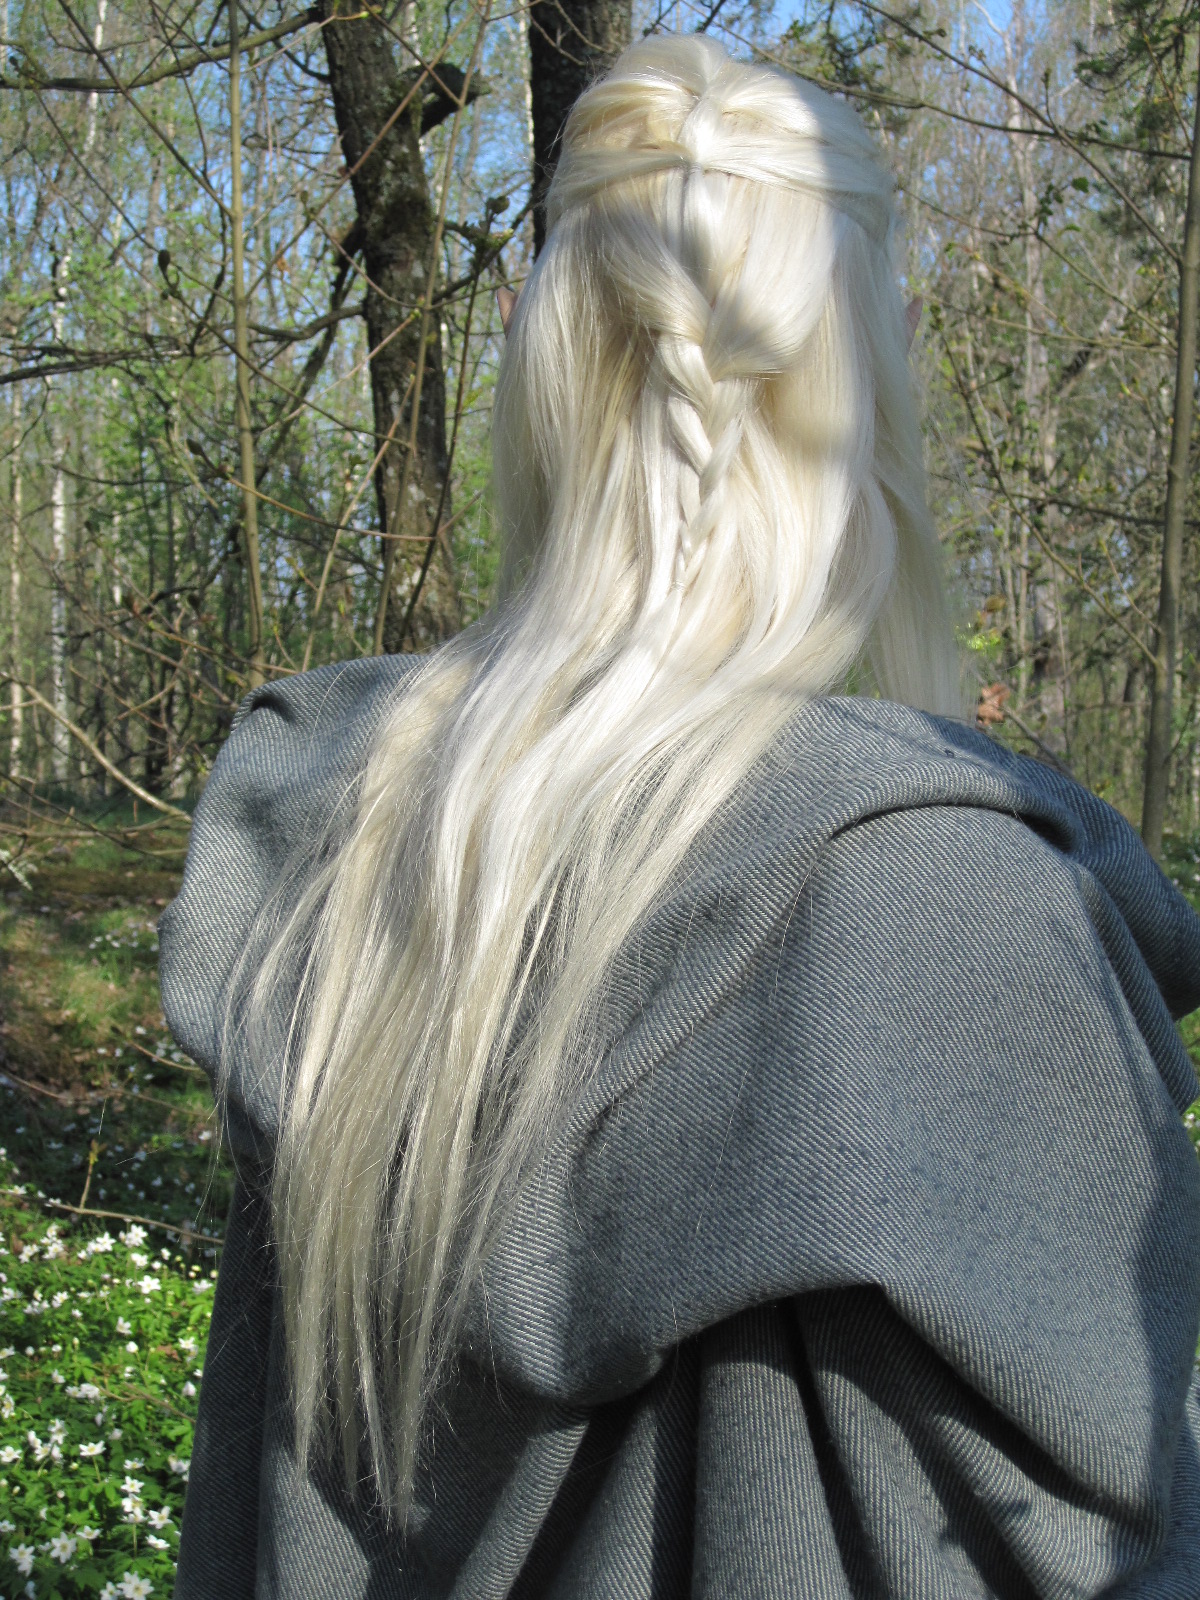 Elf hair detail by lethal-kitteh on DeviantArt